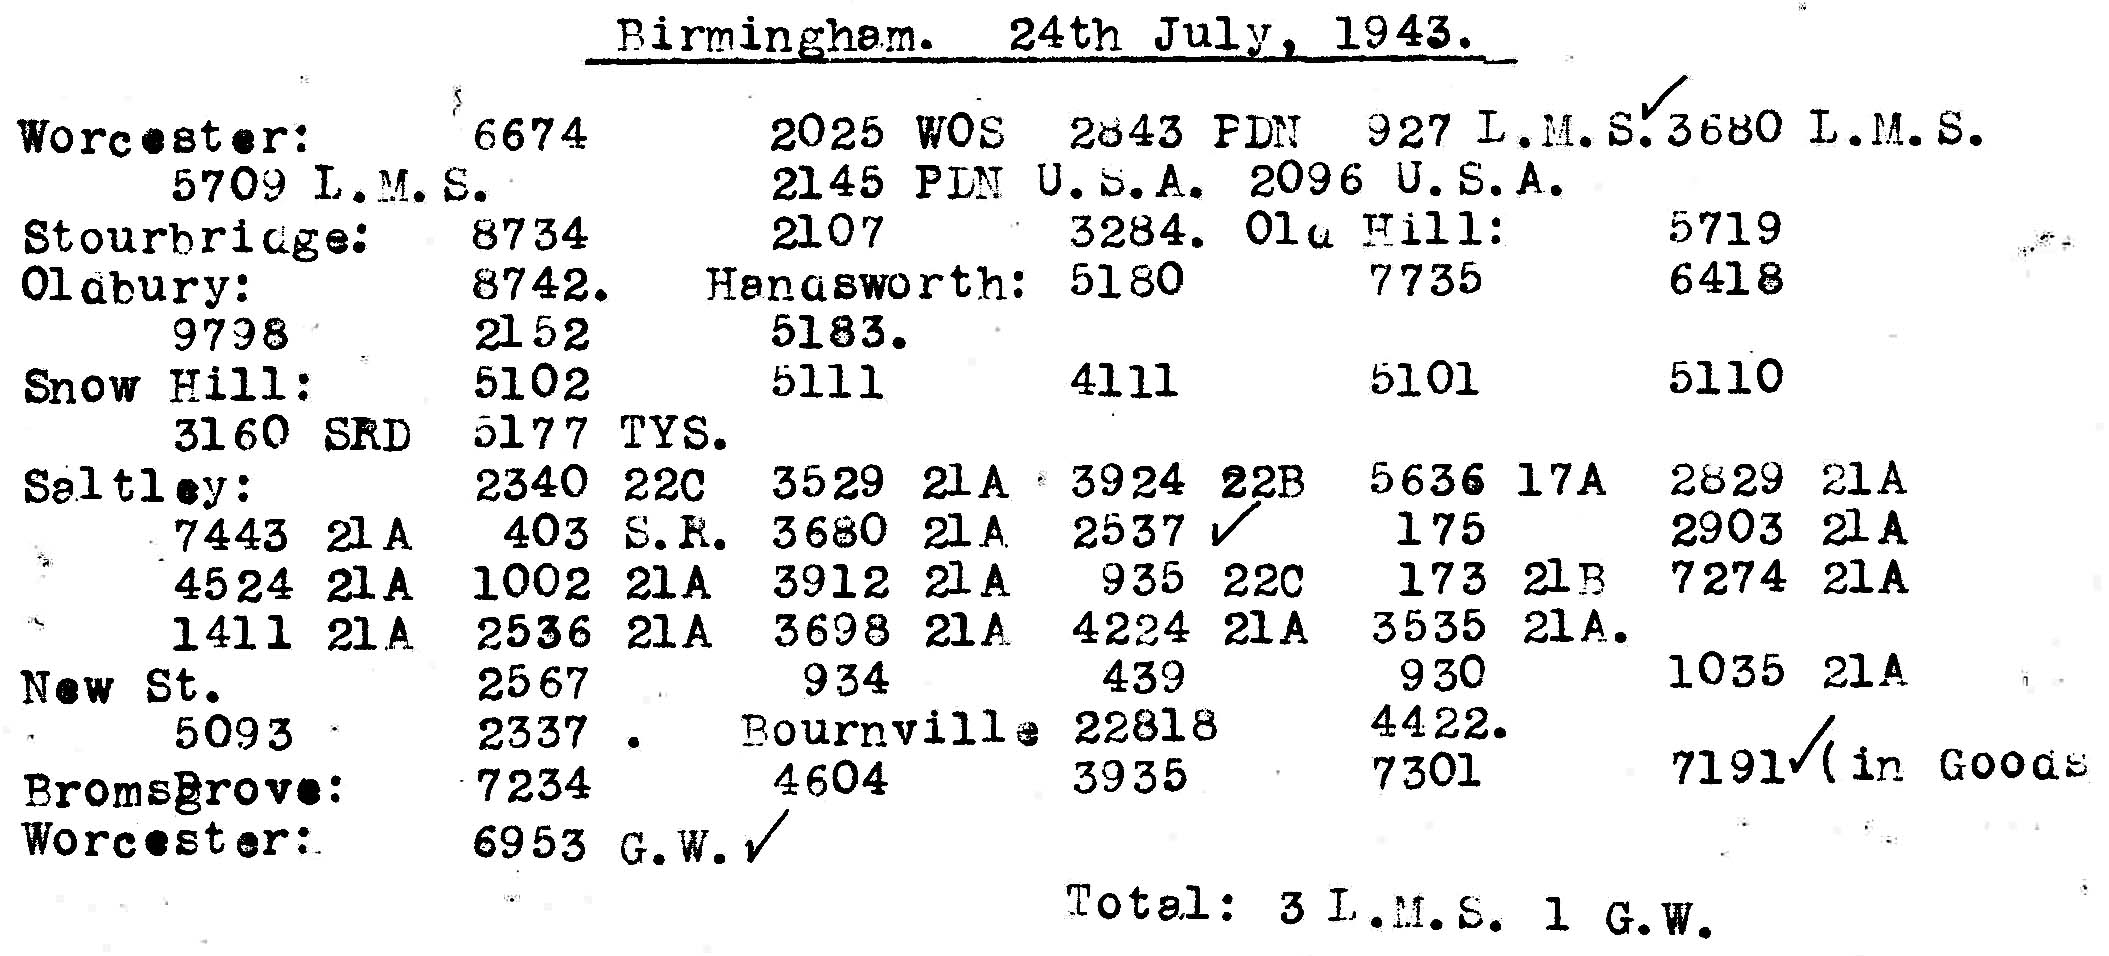 24th July 1943 - Trip to Birmingham.